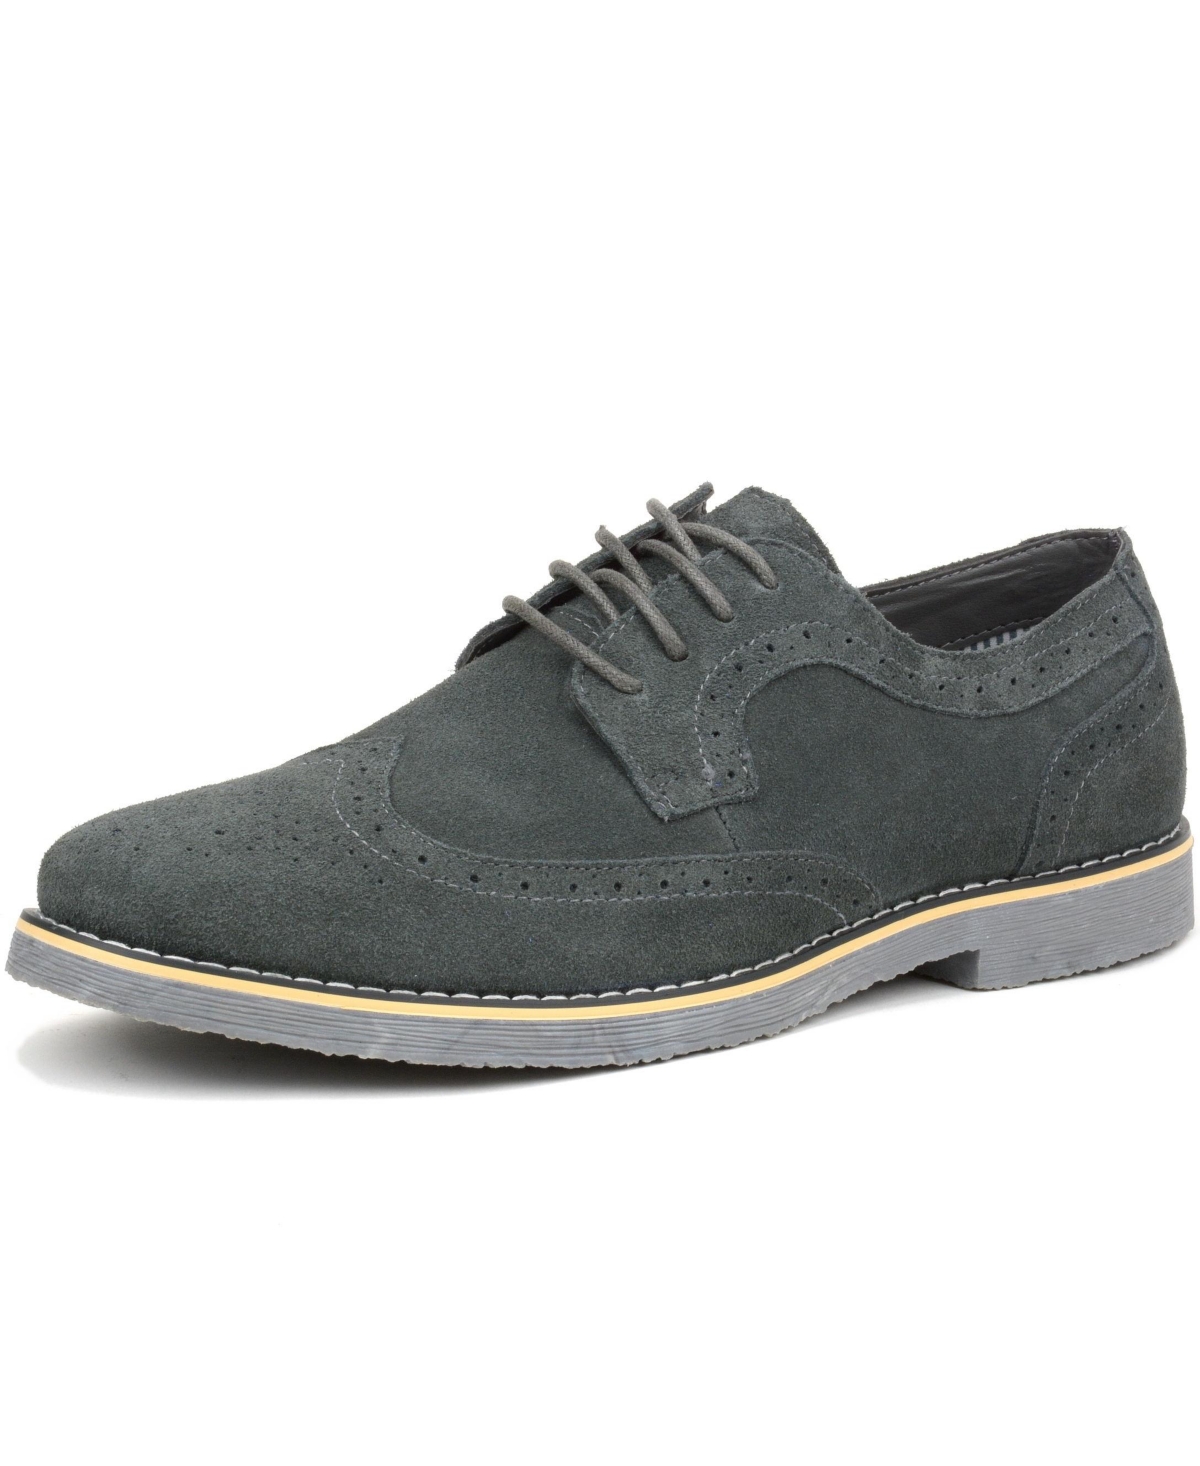 Beau Mens Dress Shoes Genuine Suede Wingtip Brogue Lace Up Oxfords - Gray